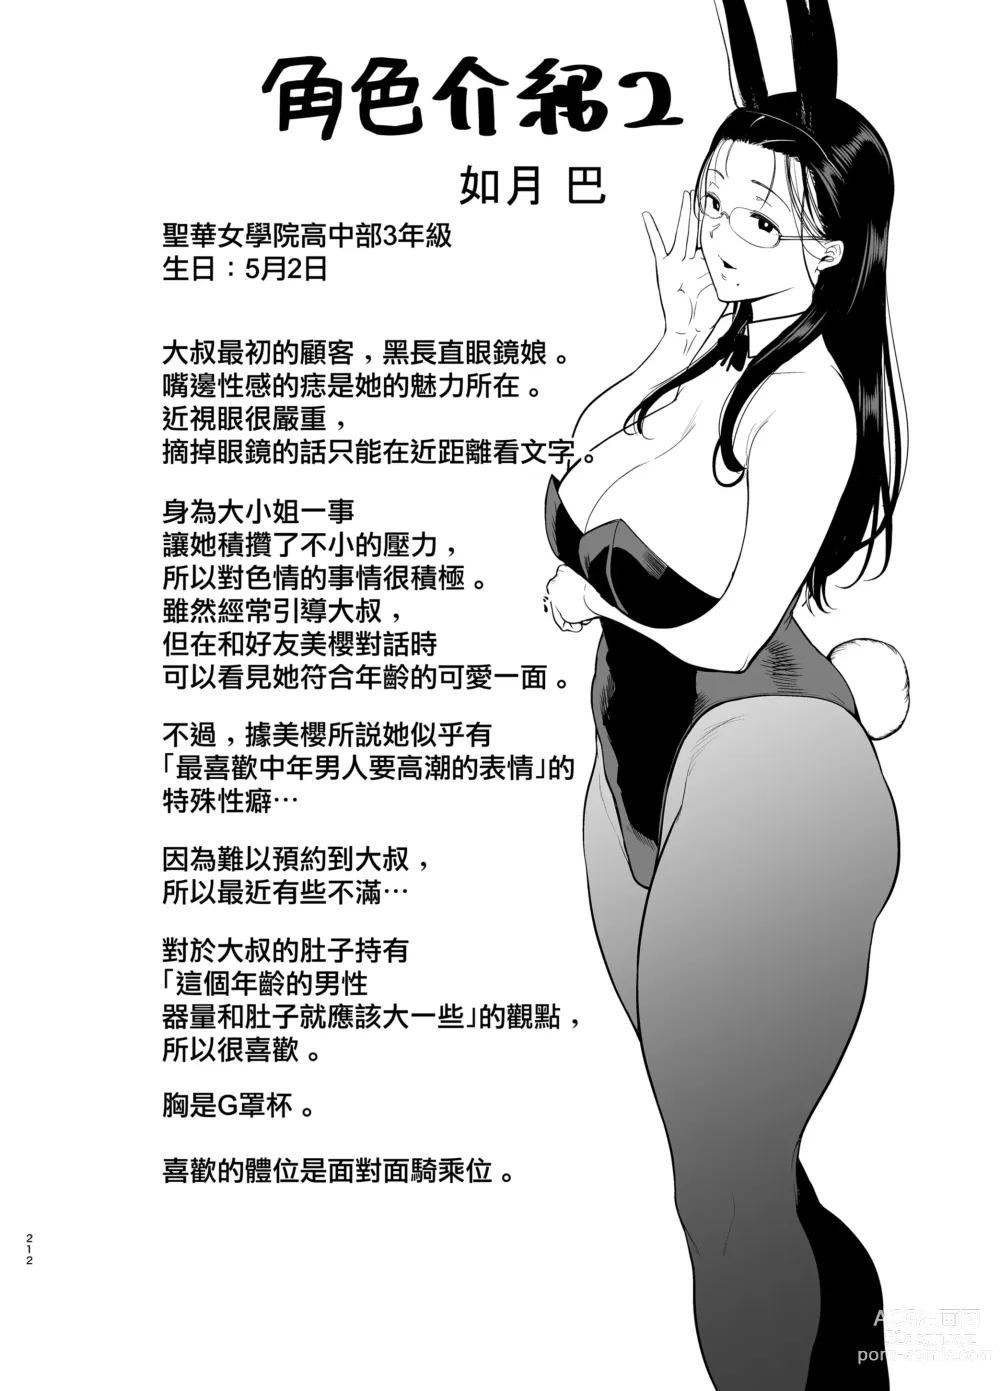 Page 213 of doujinshi 聖華女学院高等部公認竿おじさん 総集編